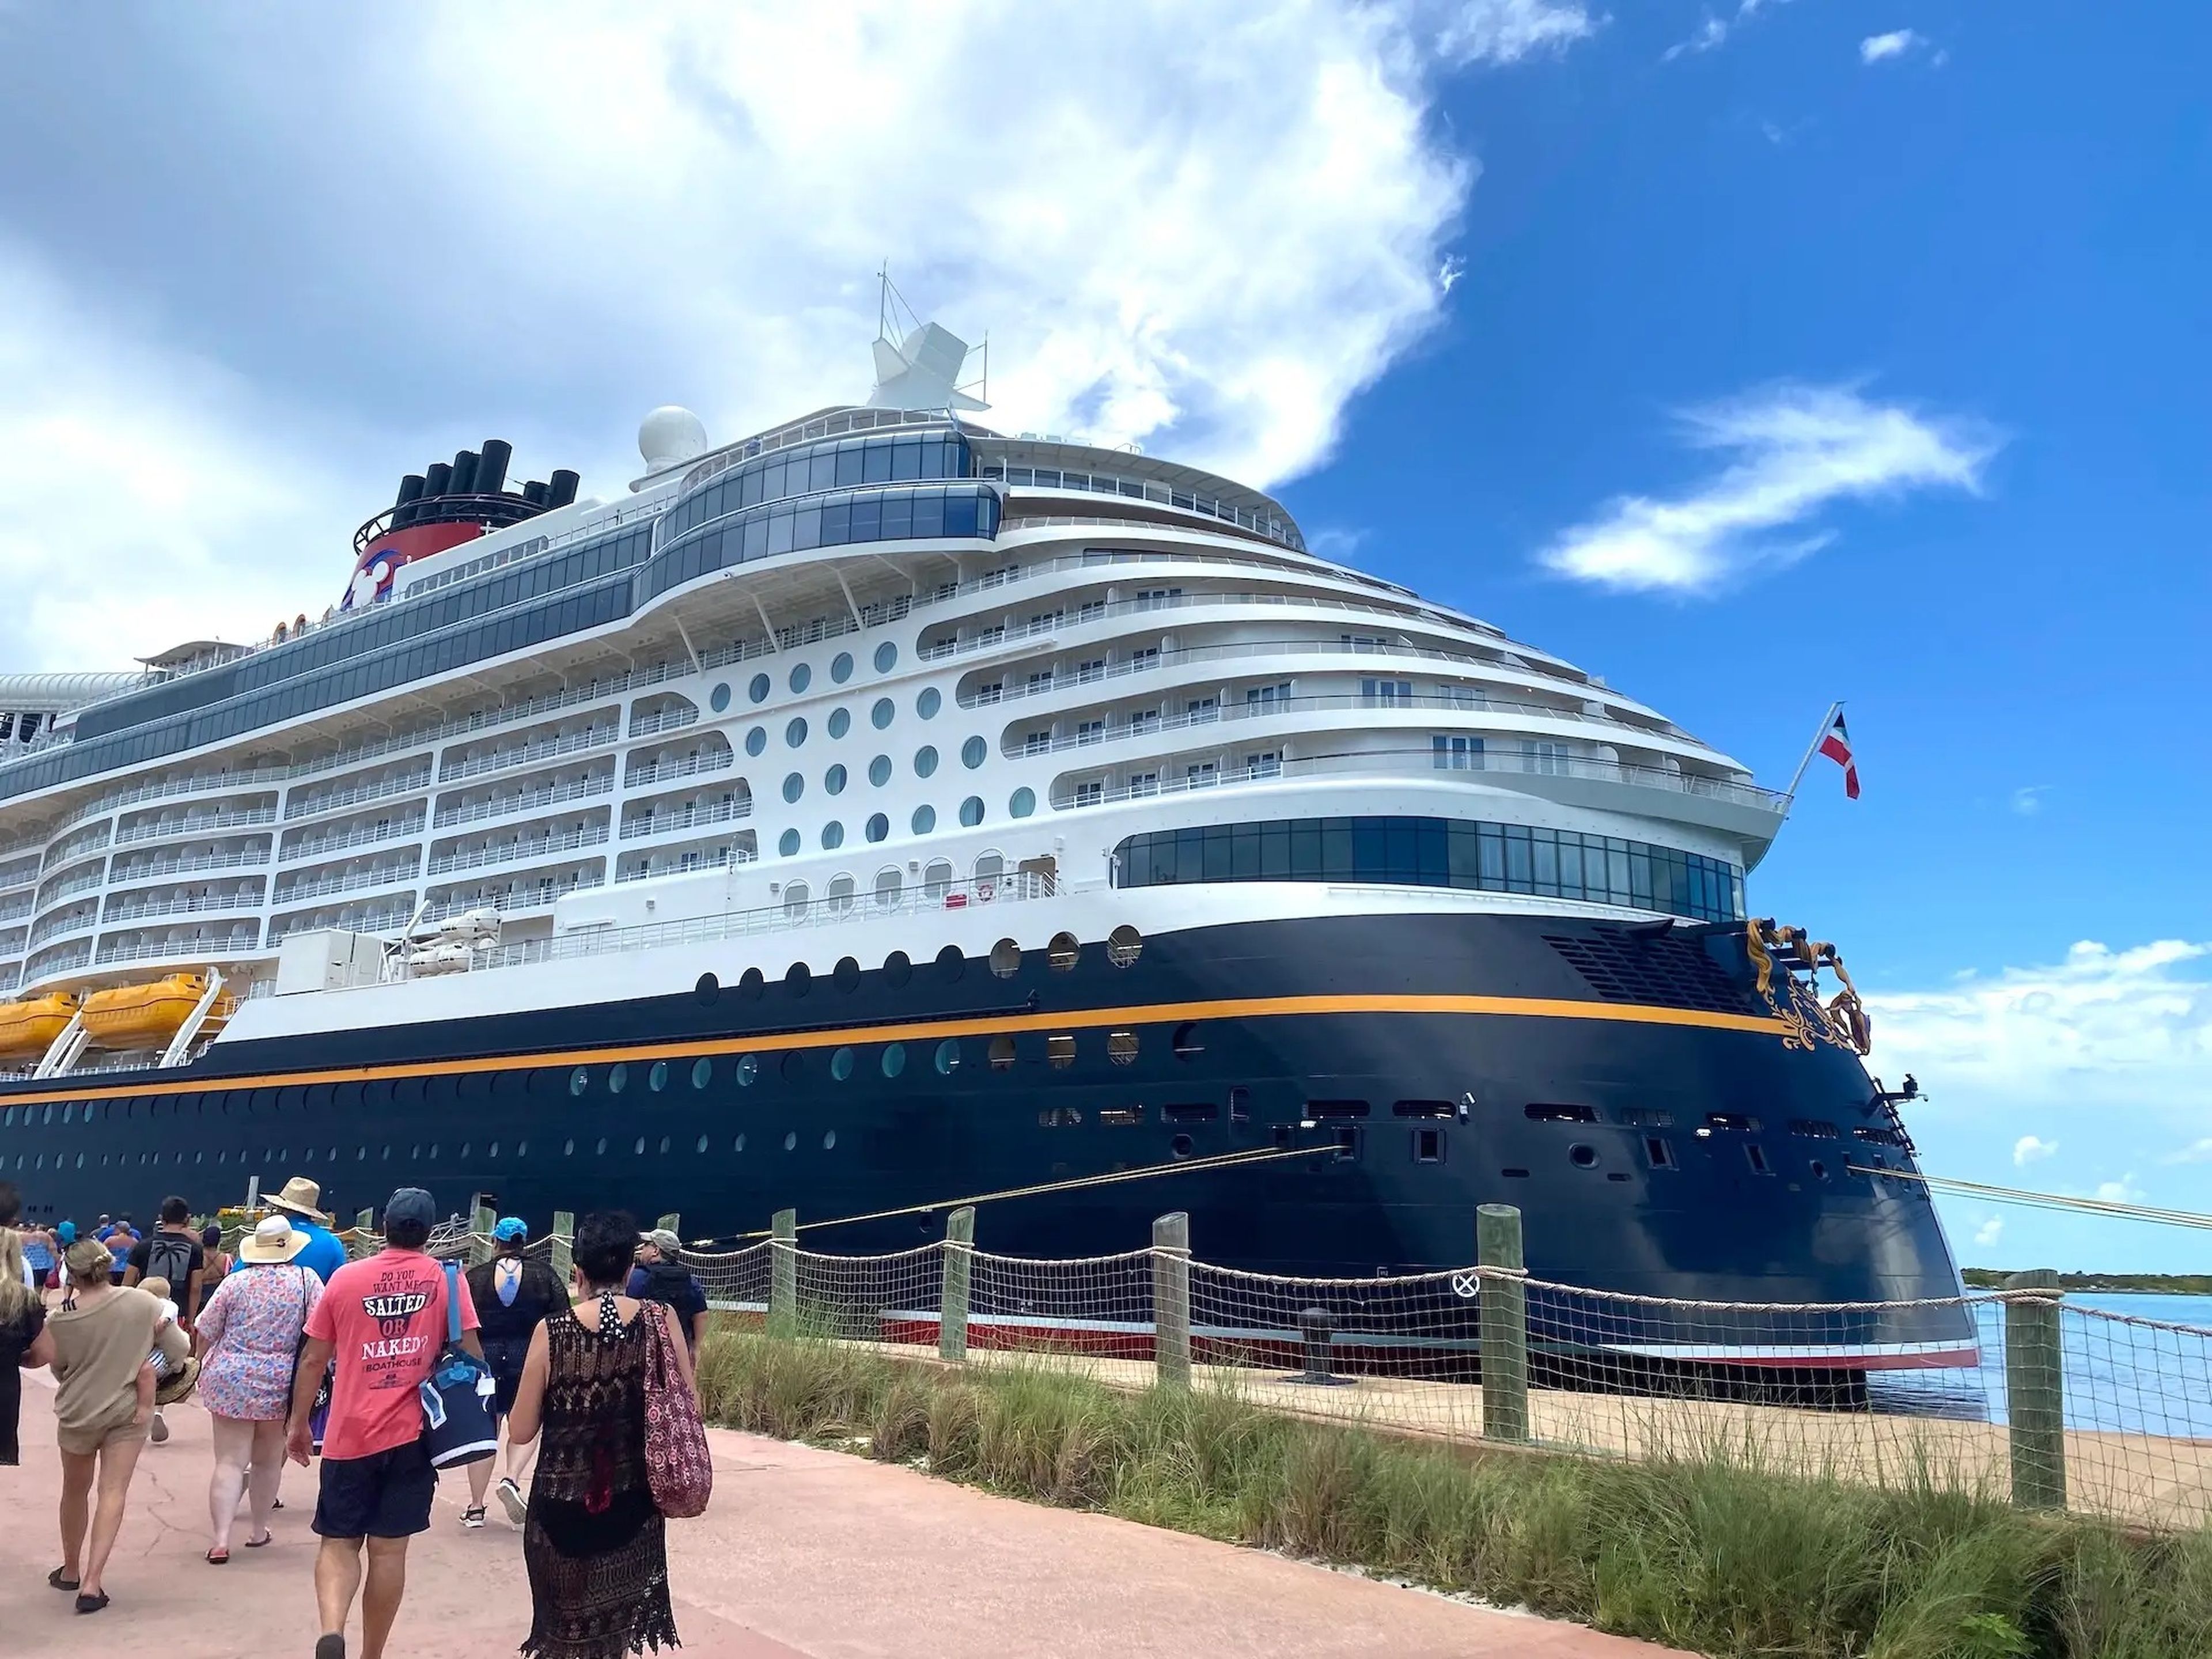 The Disney Wish cruise ship docked on Disney's private island Castaway Cay.